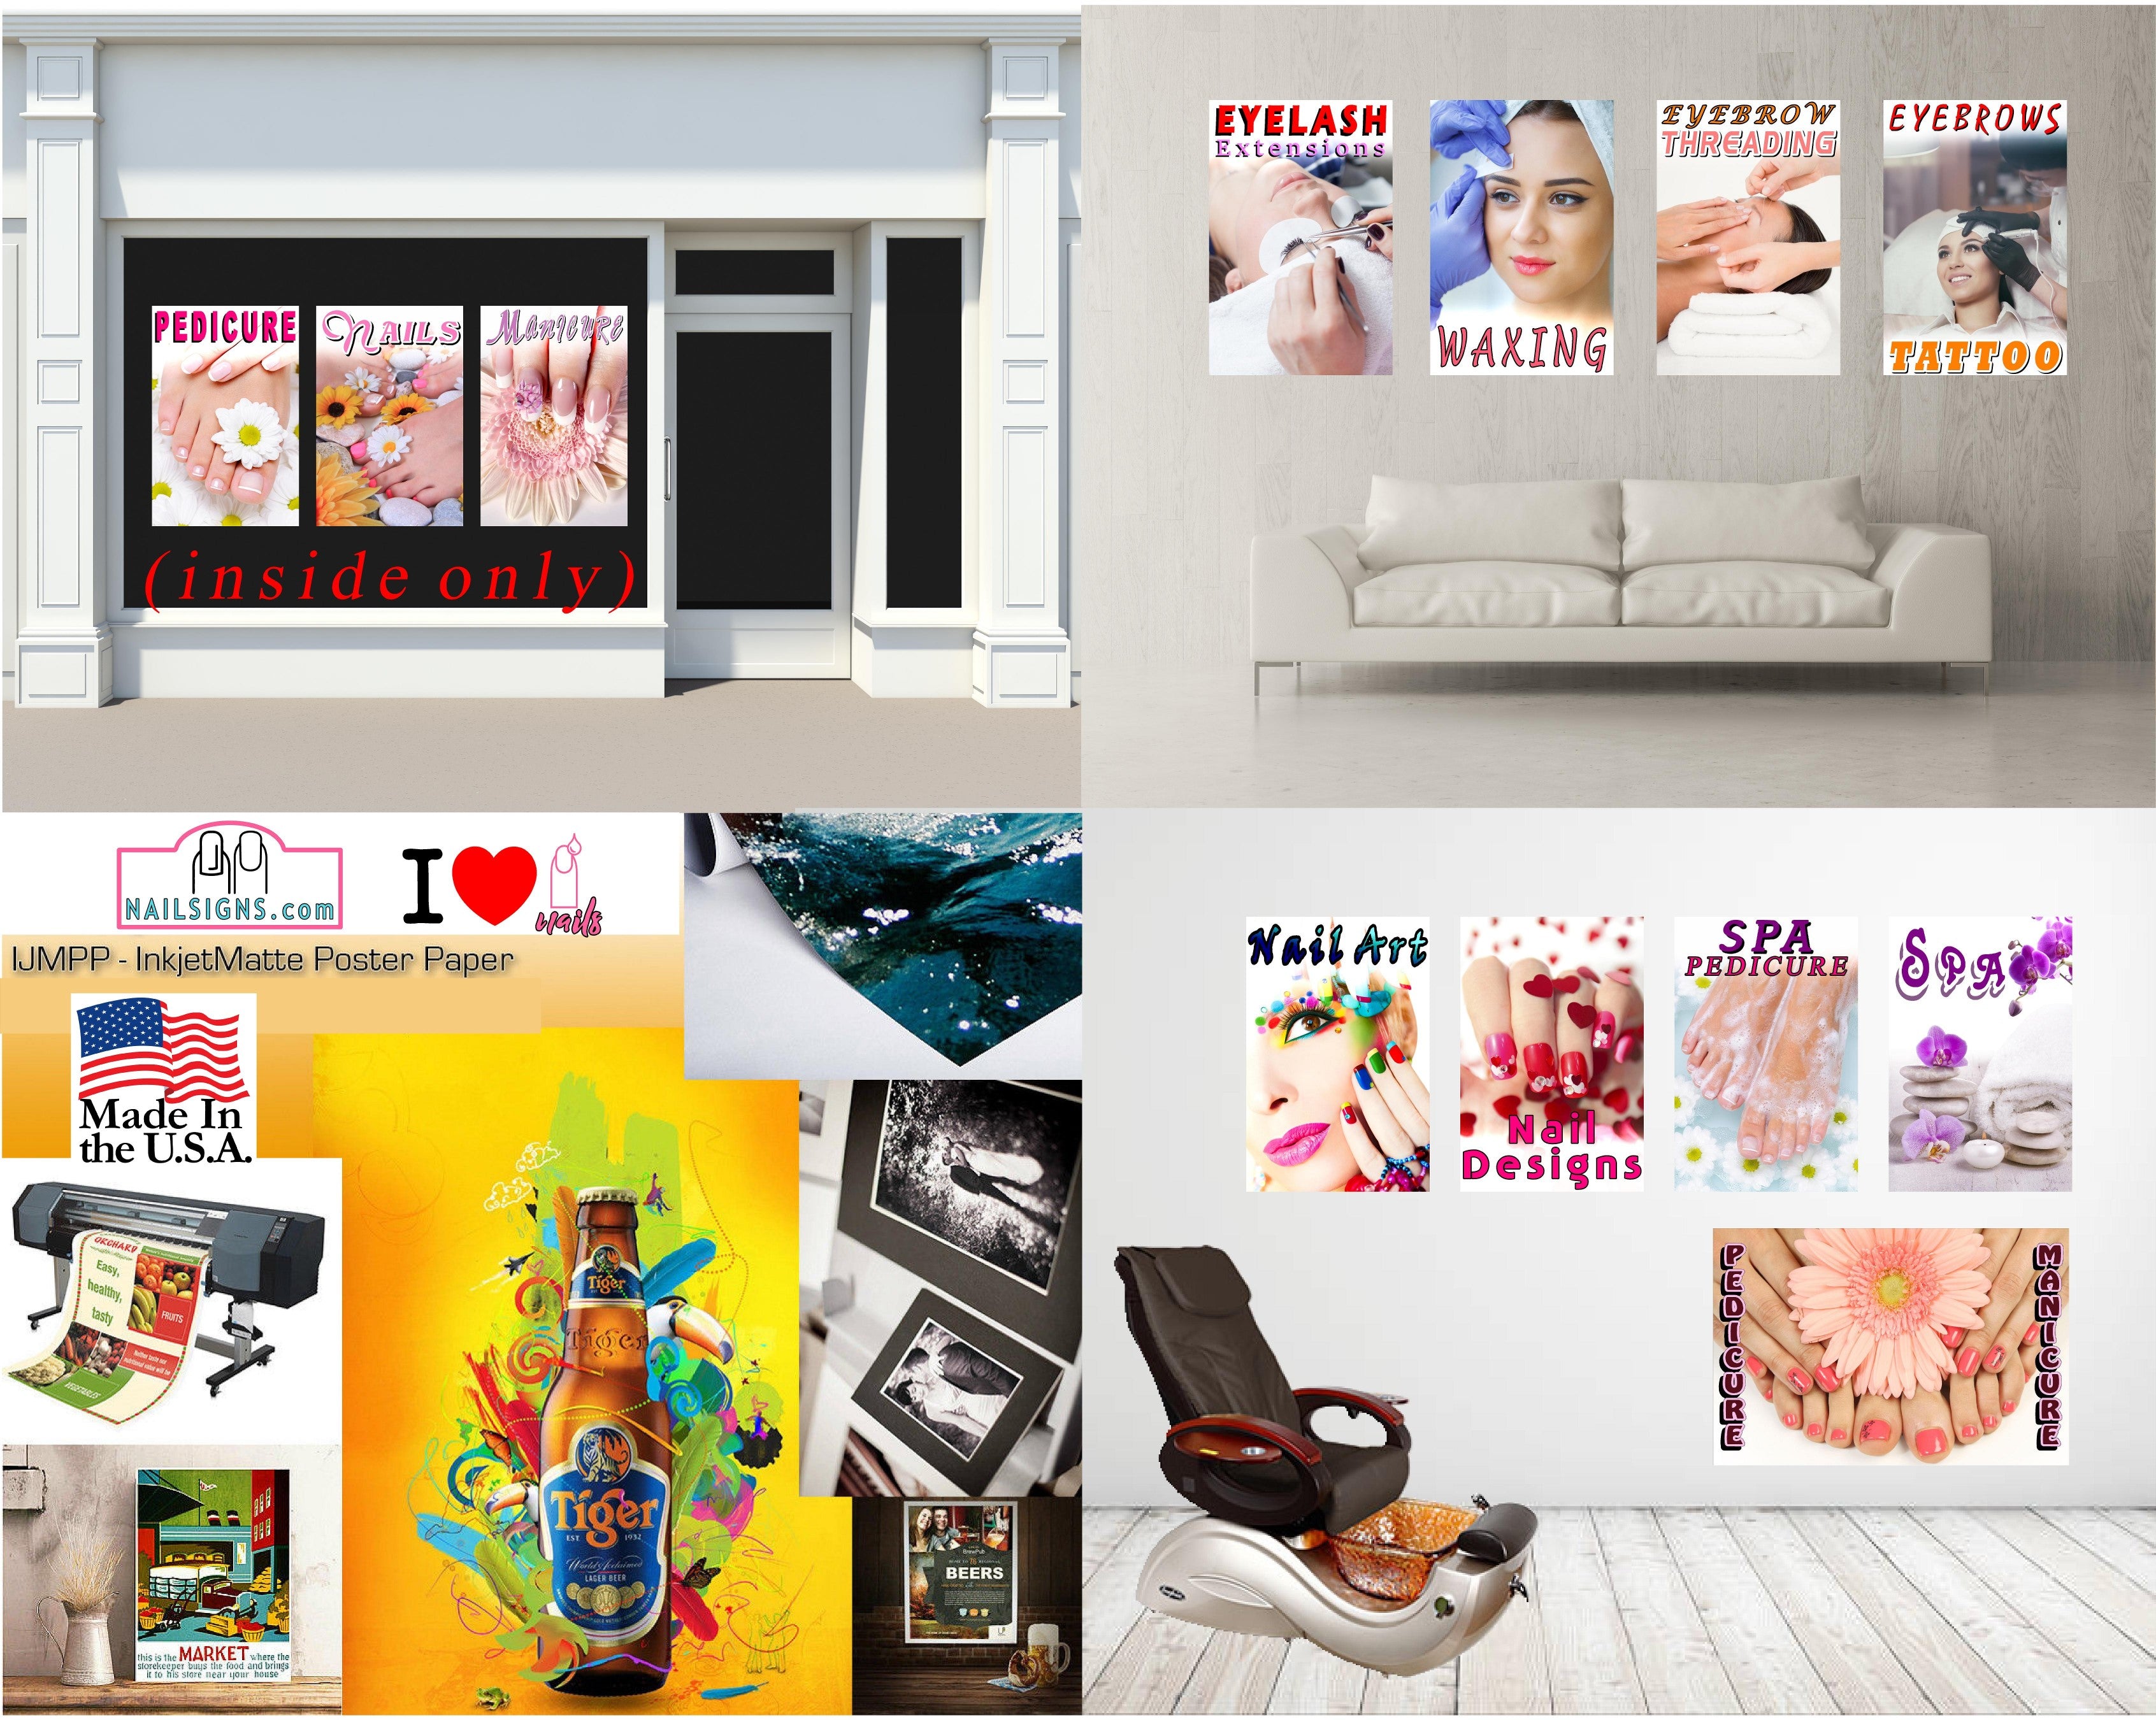 Pedicure 19 Photo-Realistic Paper Poster Premium Matte Interior Inside Sign Advertising Marketing Wall Window Non-Laminated Vertical